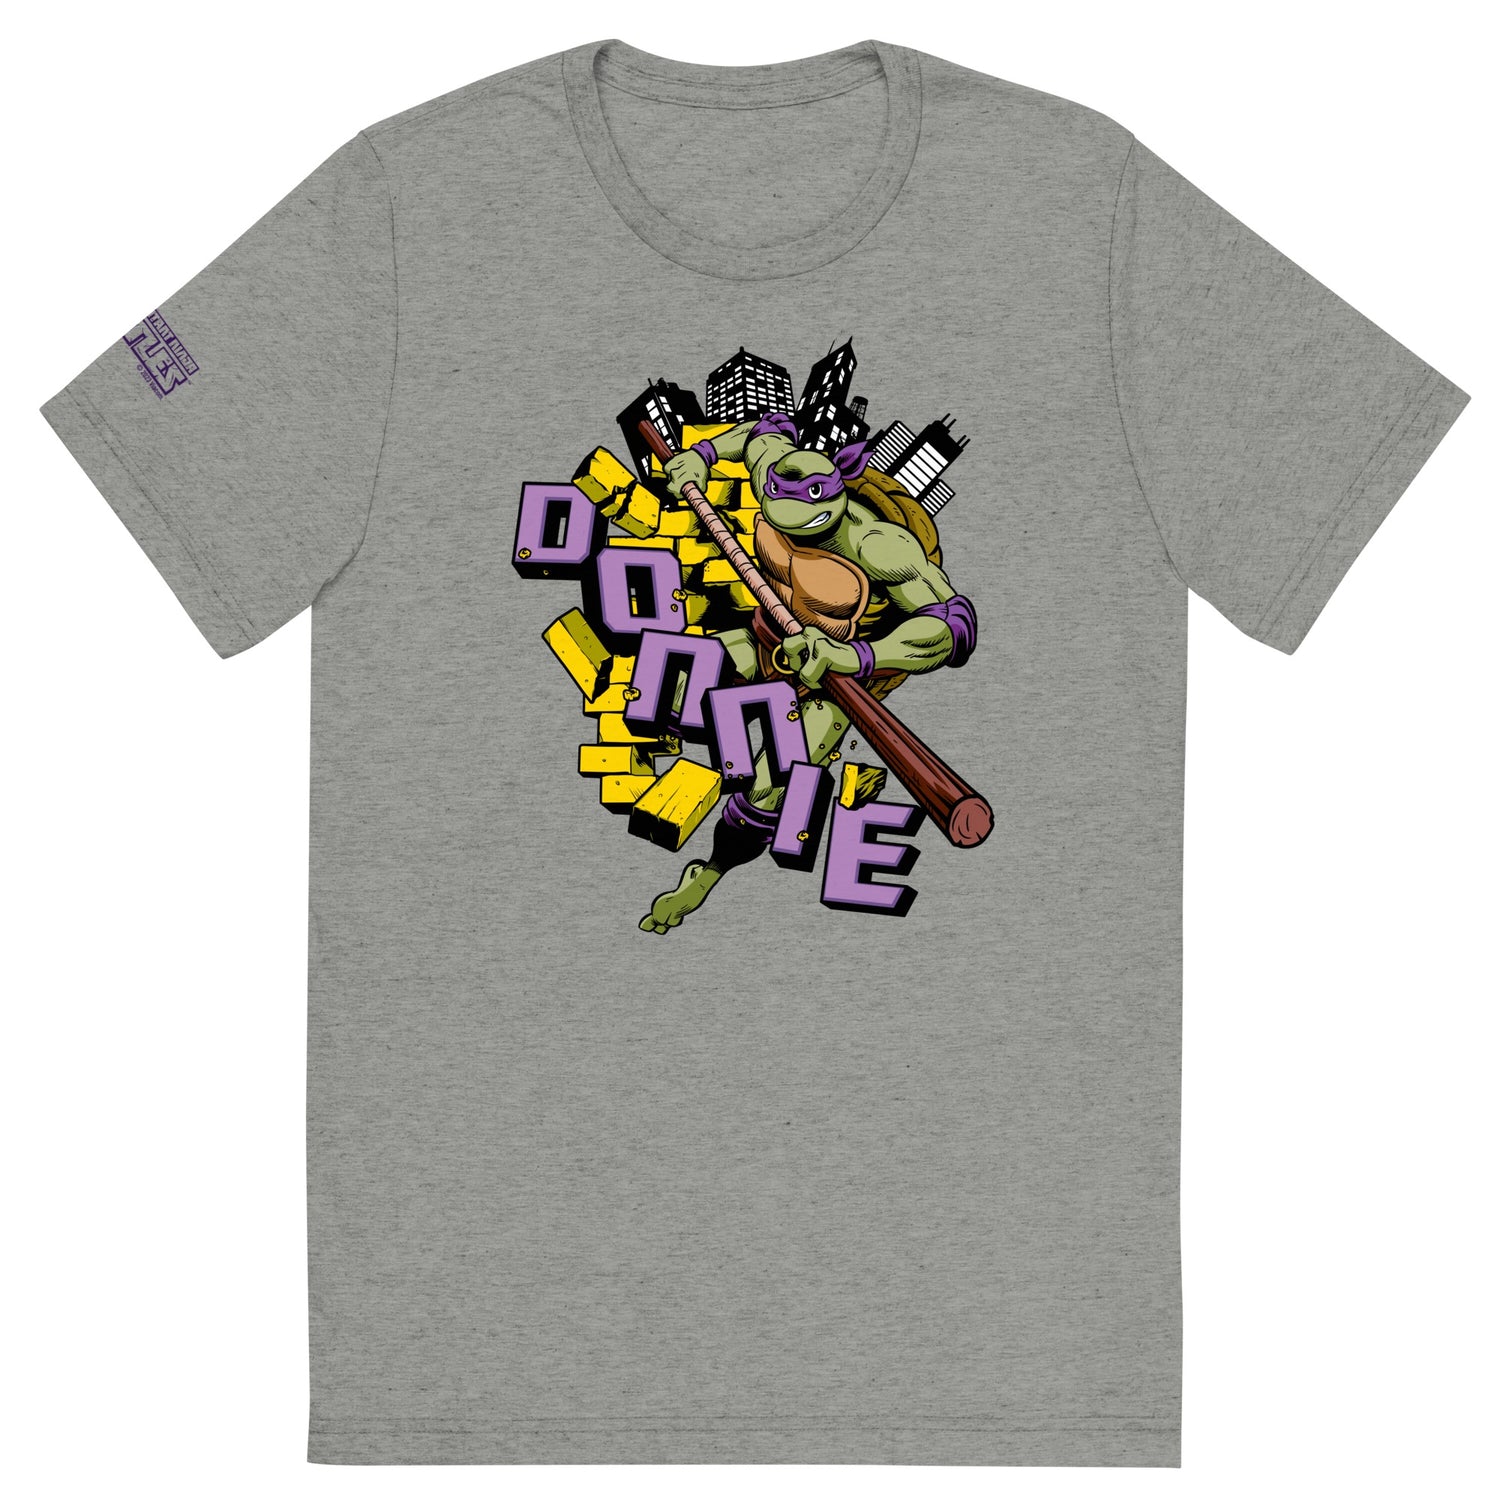 Boys Teenage Mutant Ninja Turtles Dry Fit T-Shirt Size Youth Small